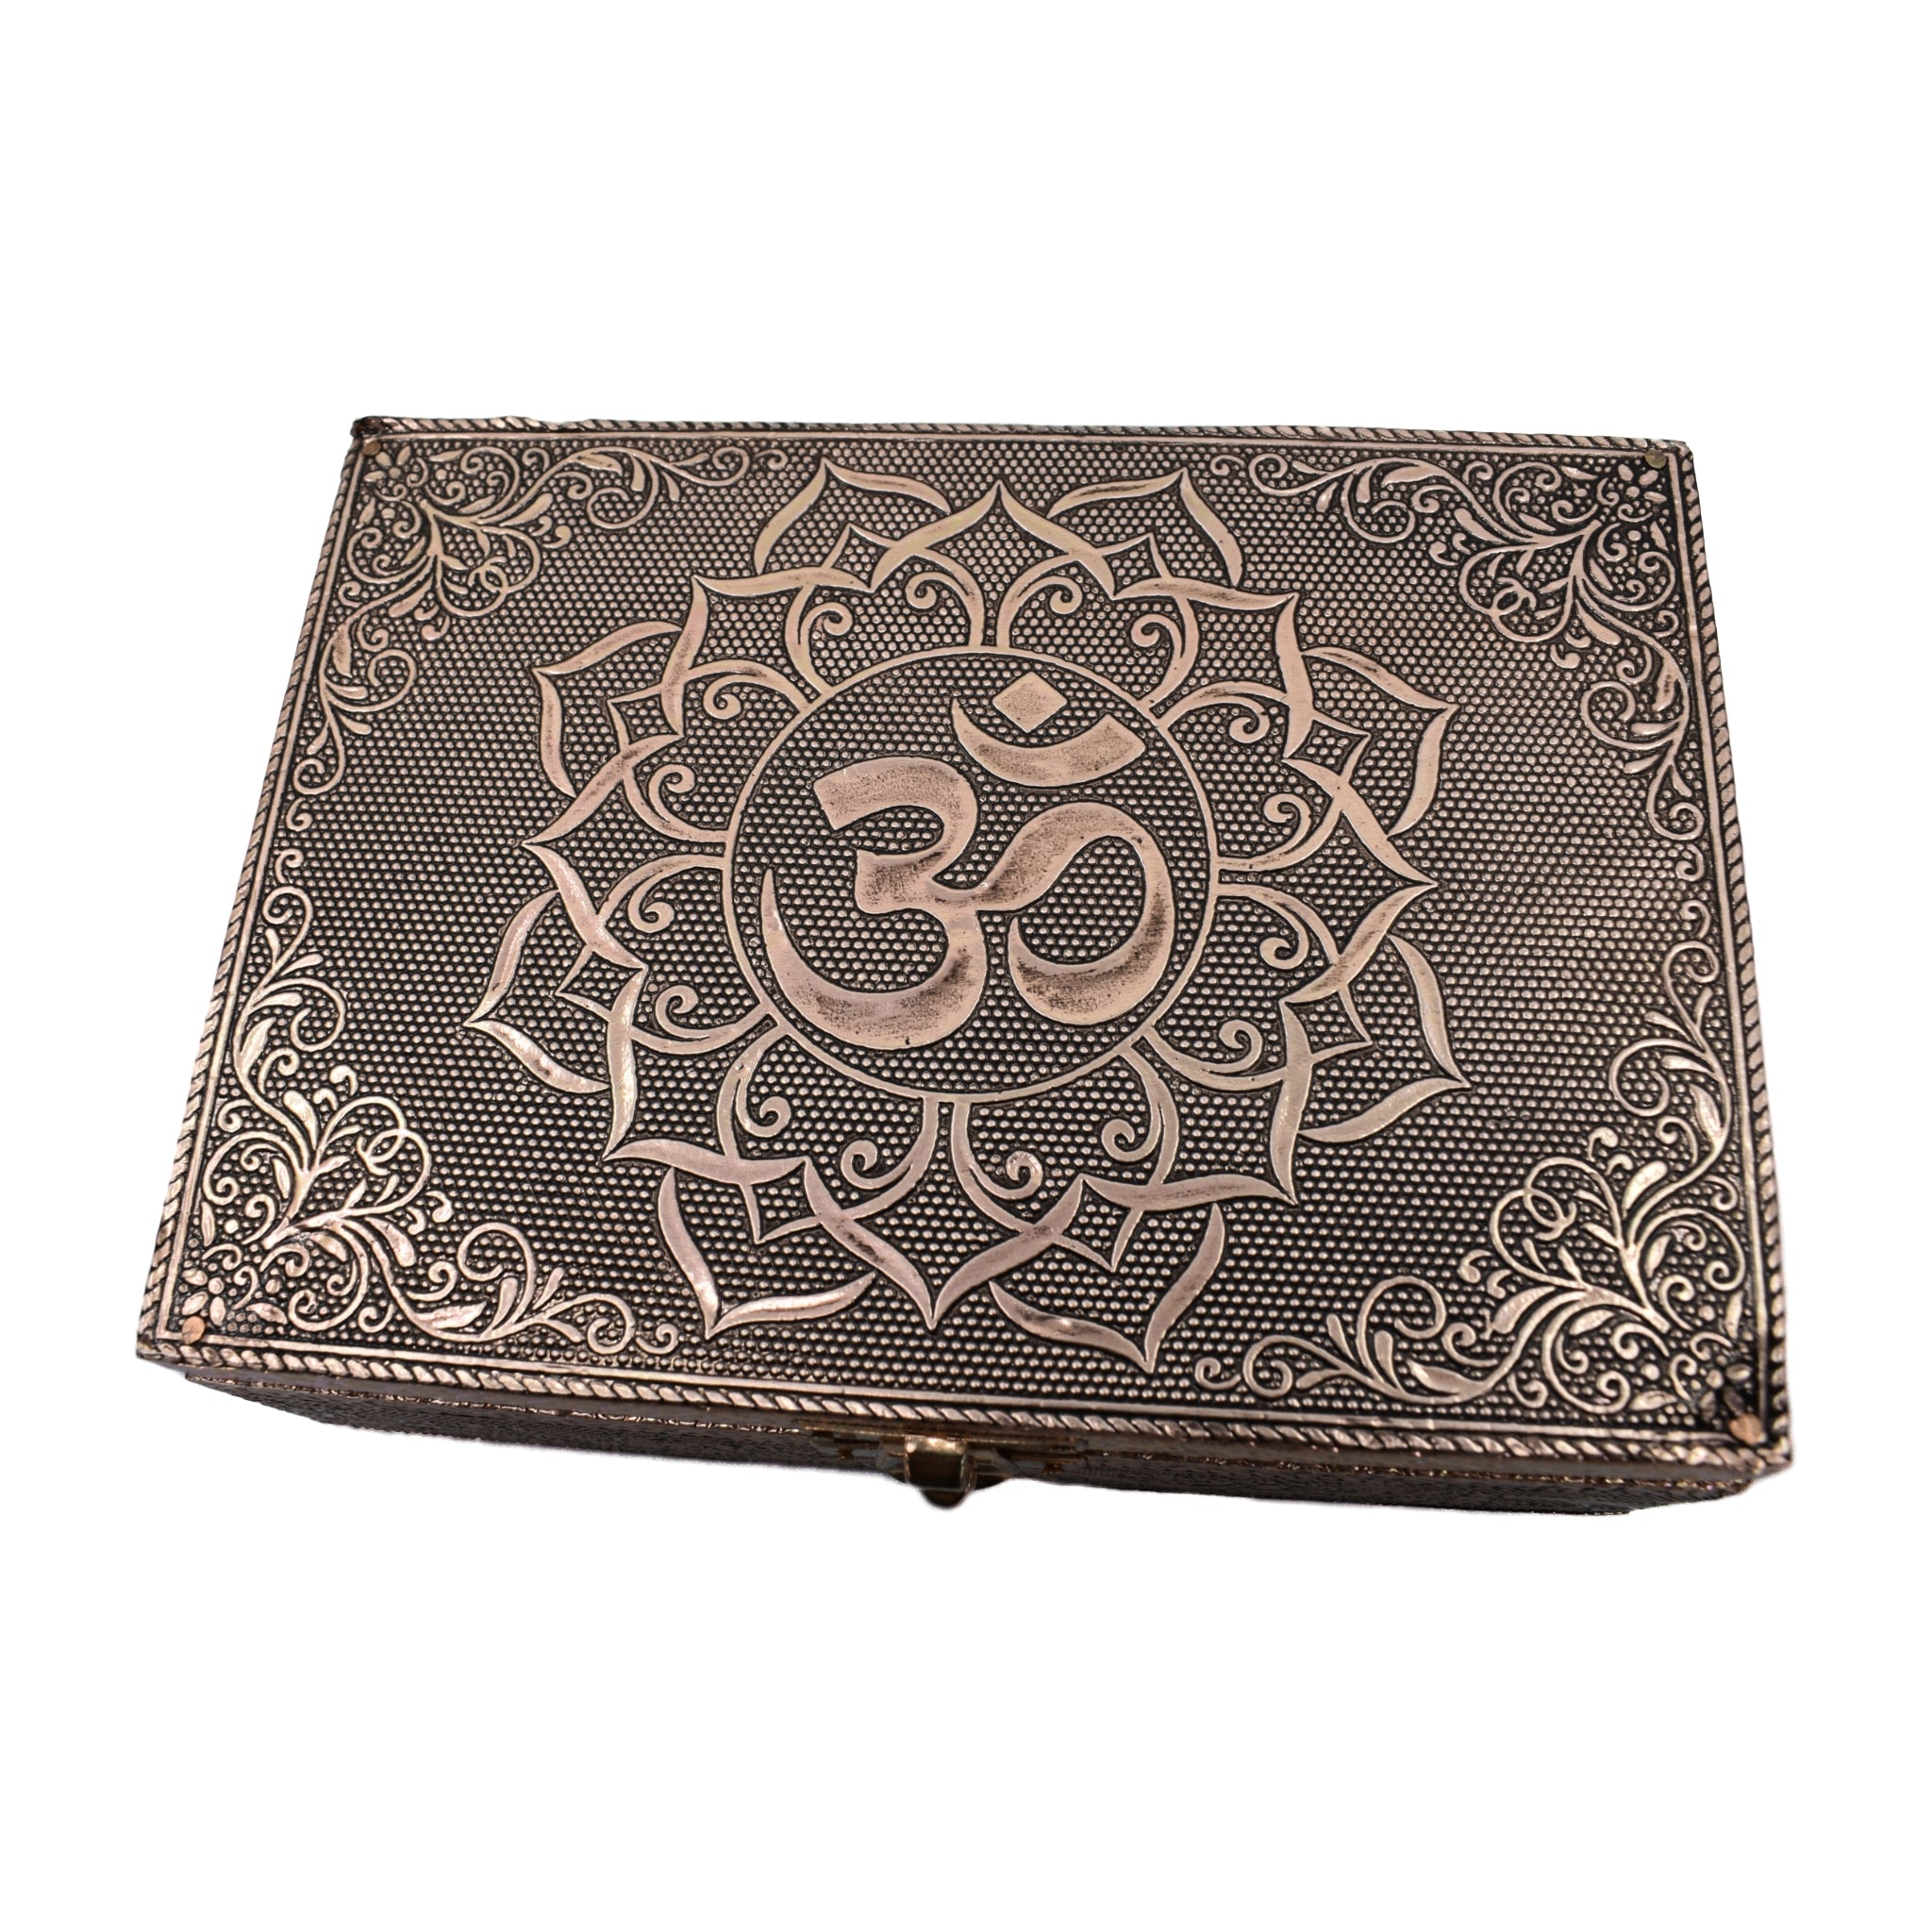 Wood Box copper encased, floral pattern with Om symbol